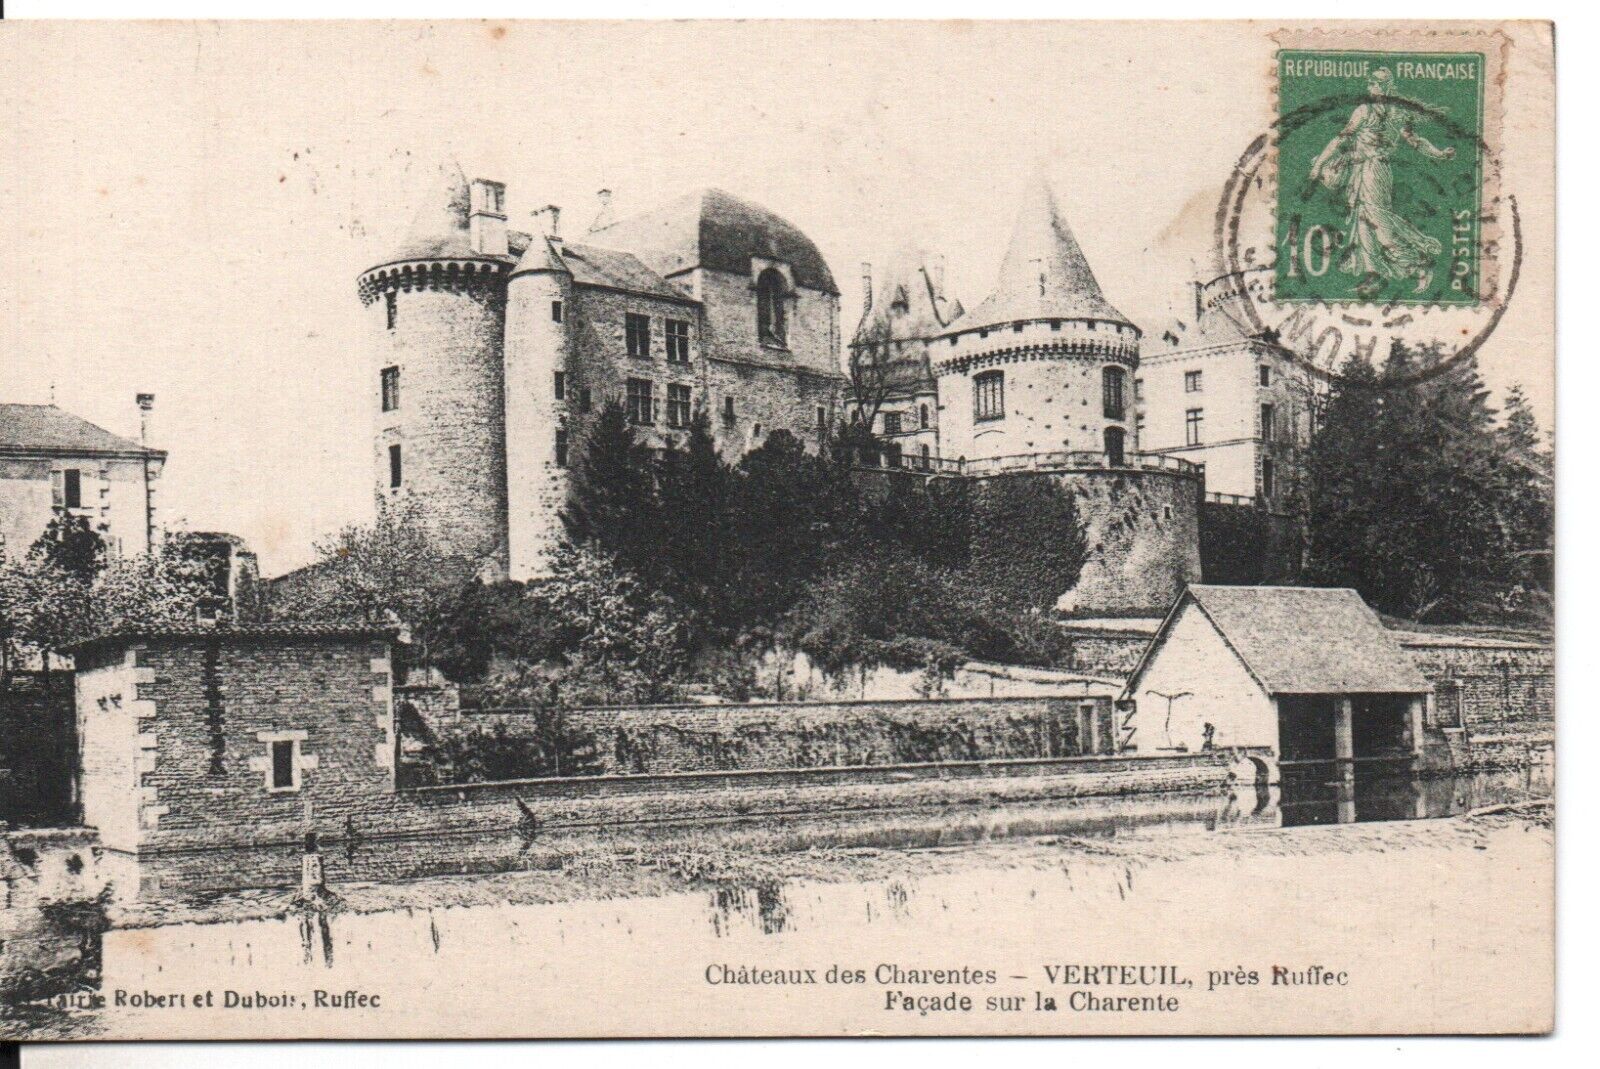 CPA - VERTEUIL near Ruffec - Château des Charentes - facade on the Charente